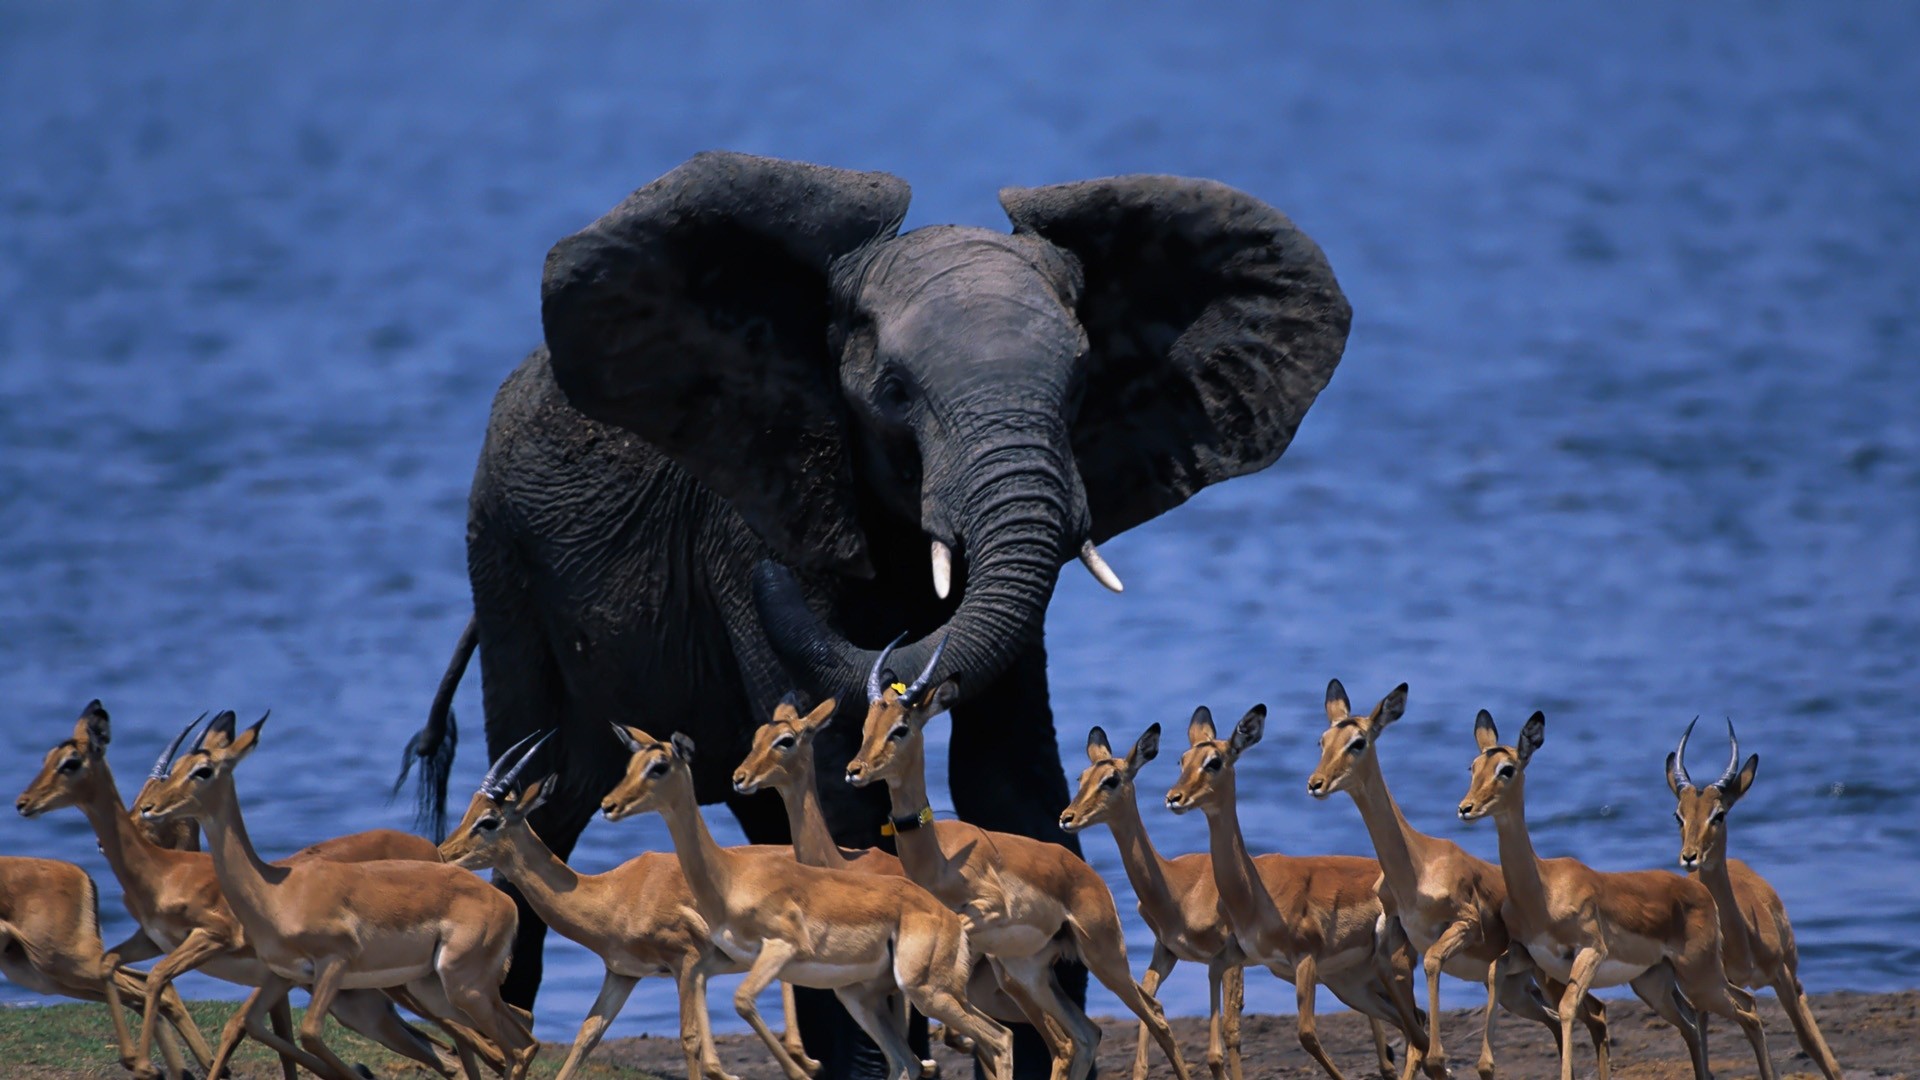 1920x1080  Wallpaper wildlife africa, elephant, duiker, pygmy antelope, run